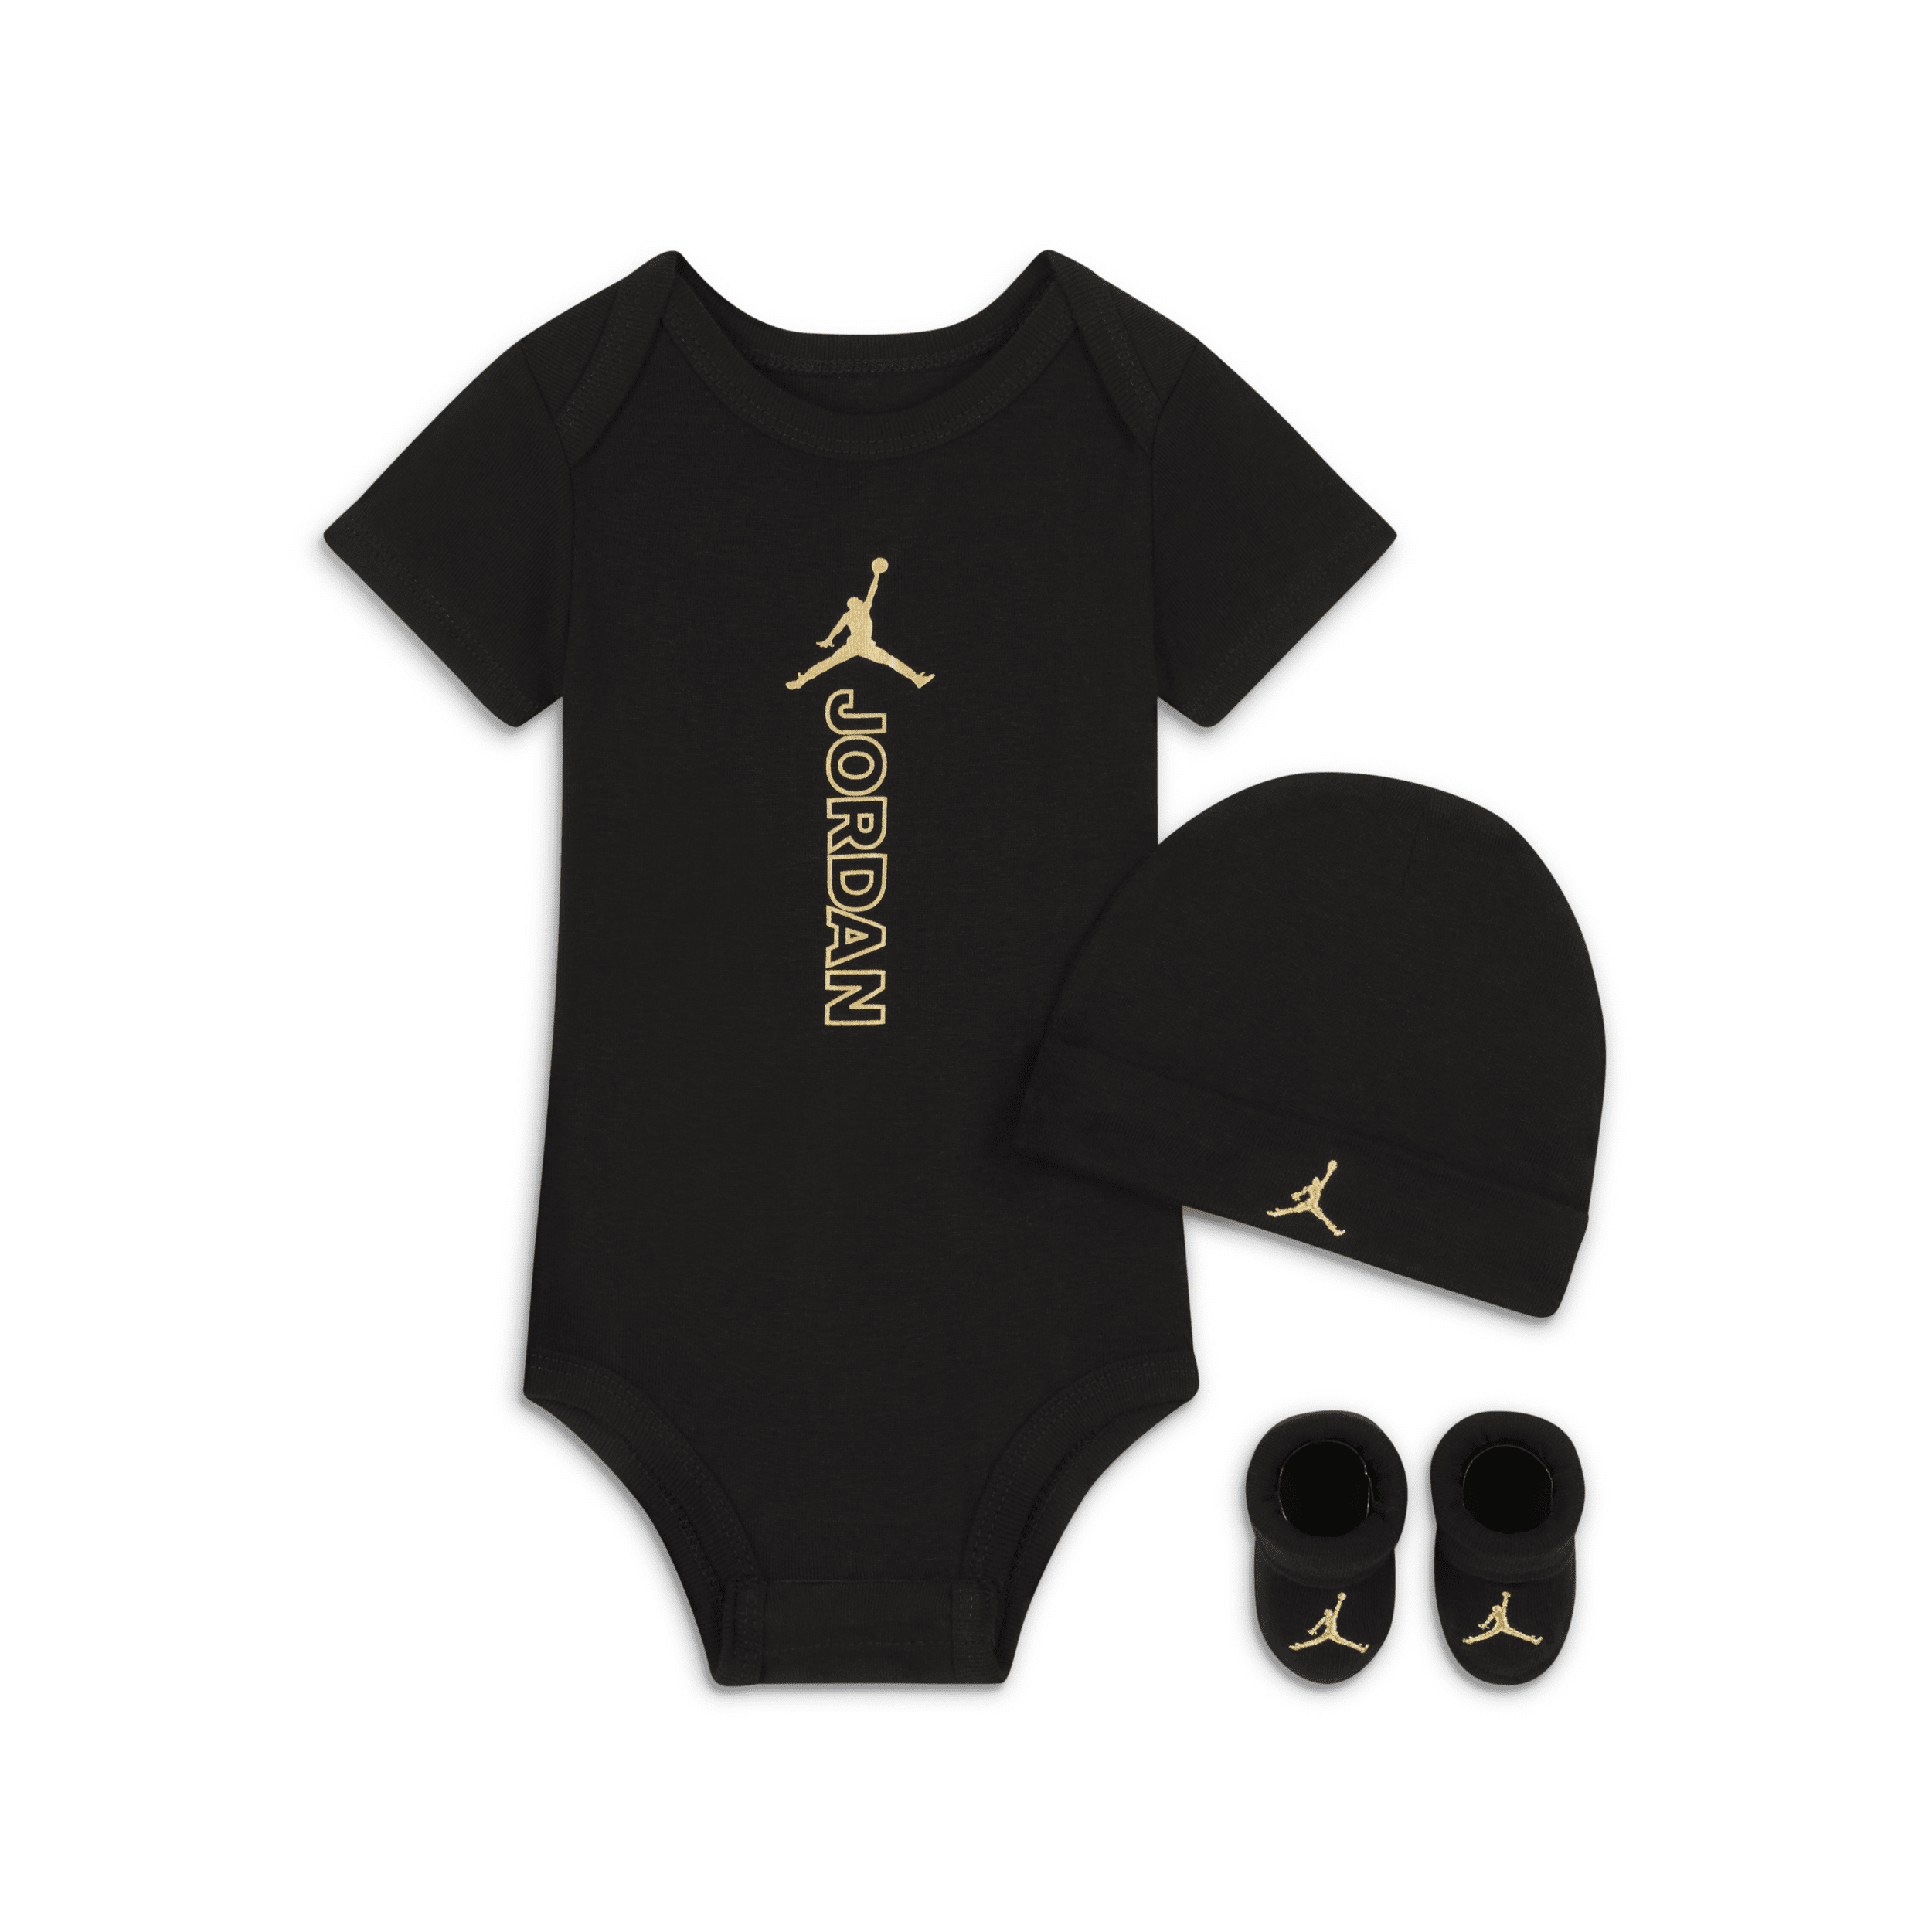 Jordan Black & Gold Bodysuit, Hat And Booties Box Set Baby Set